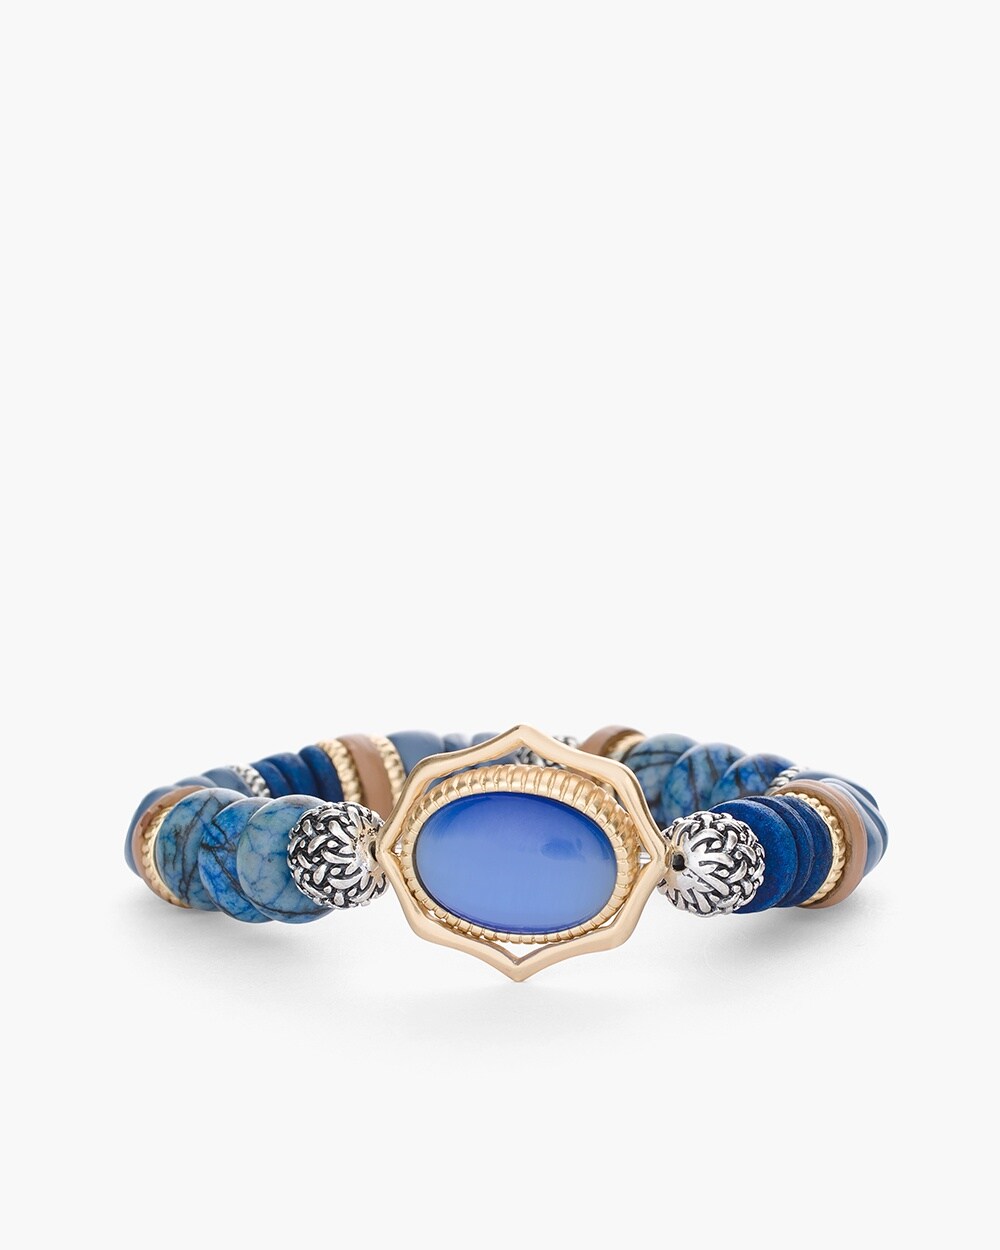 Blue and Gold-Tone Stretch Bracelet